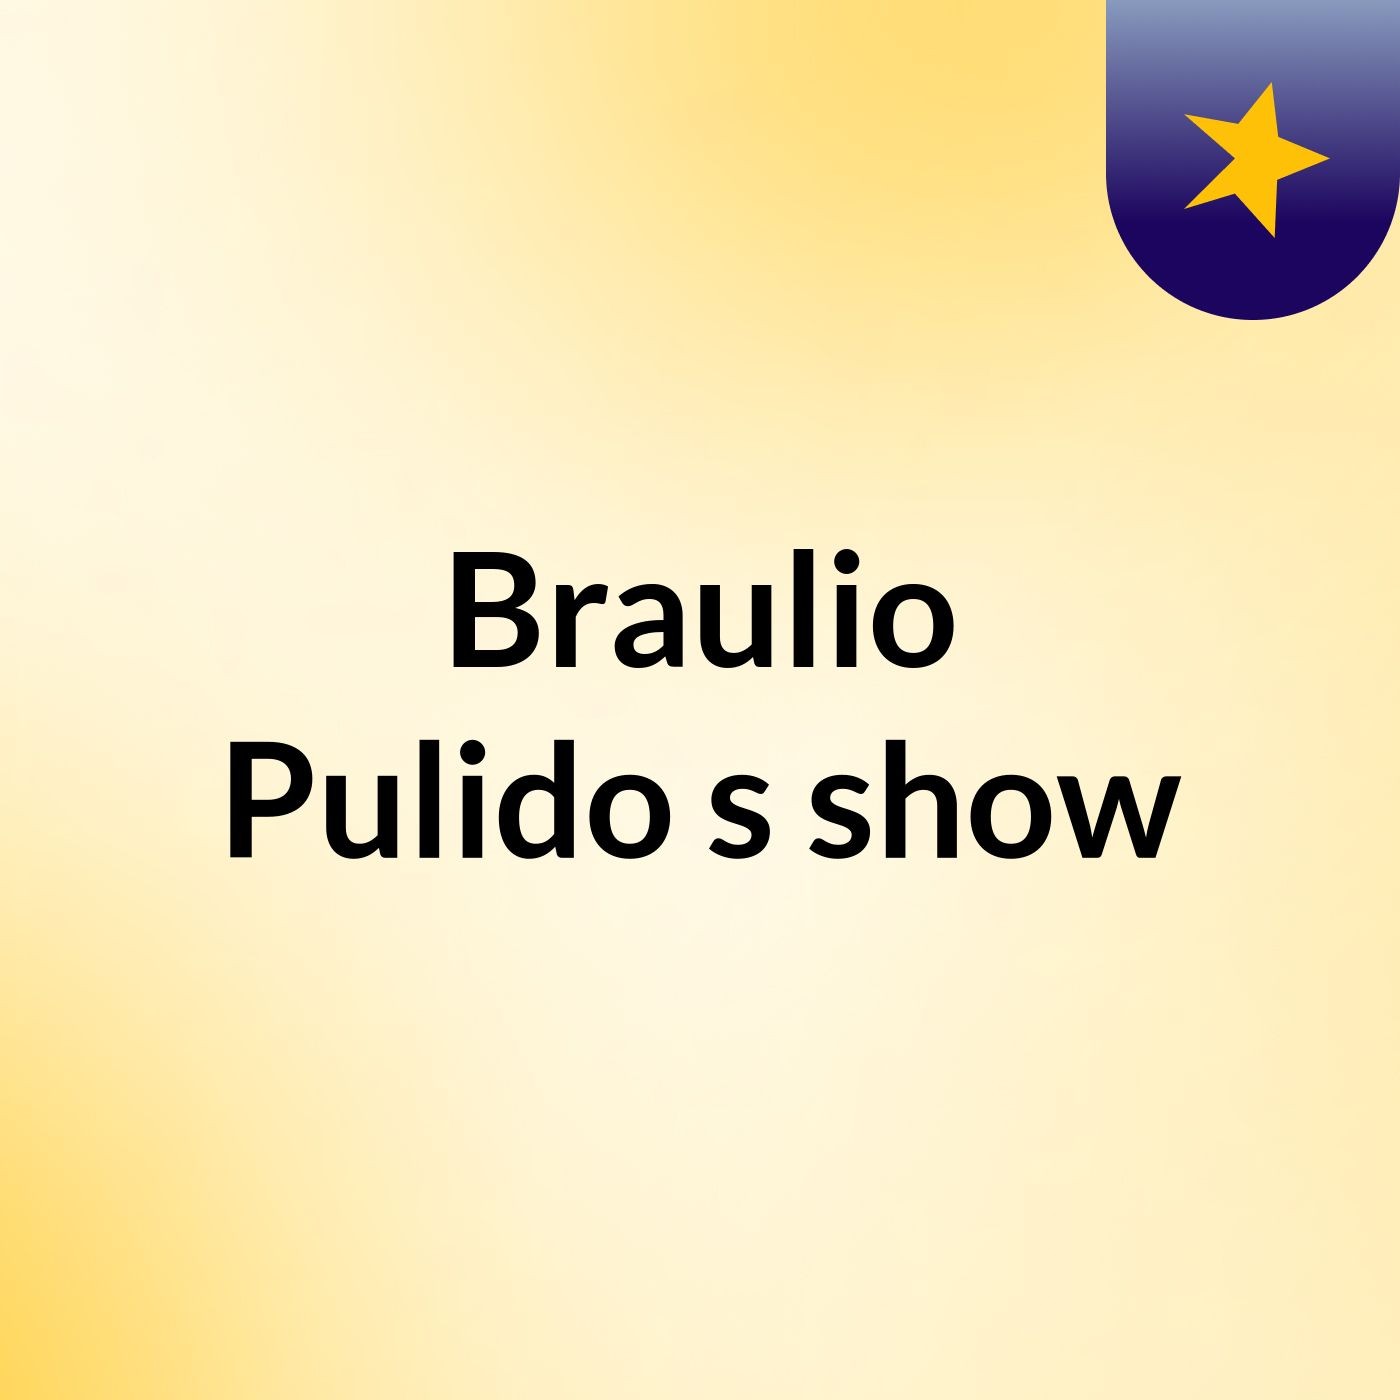 Braulio Pulido's show